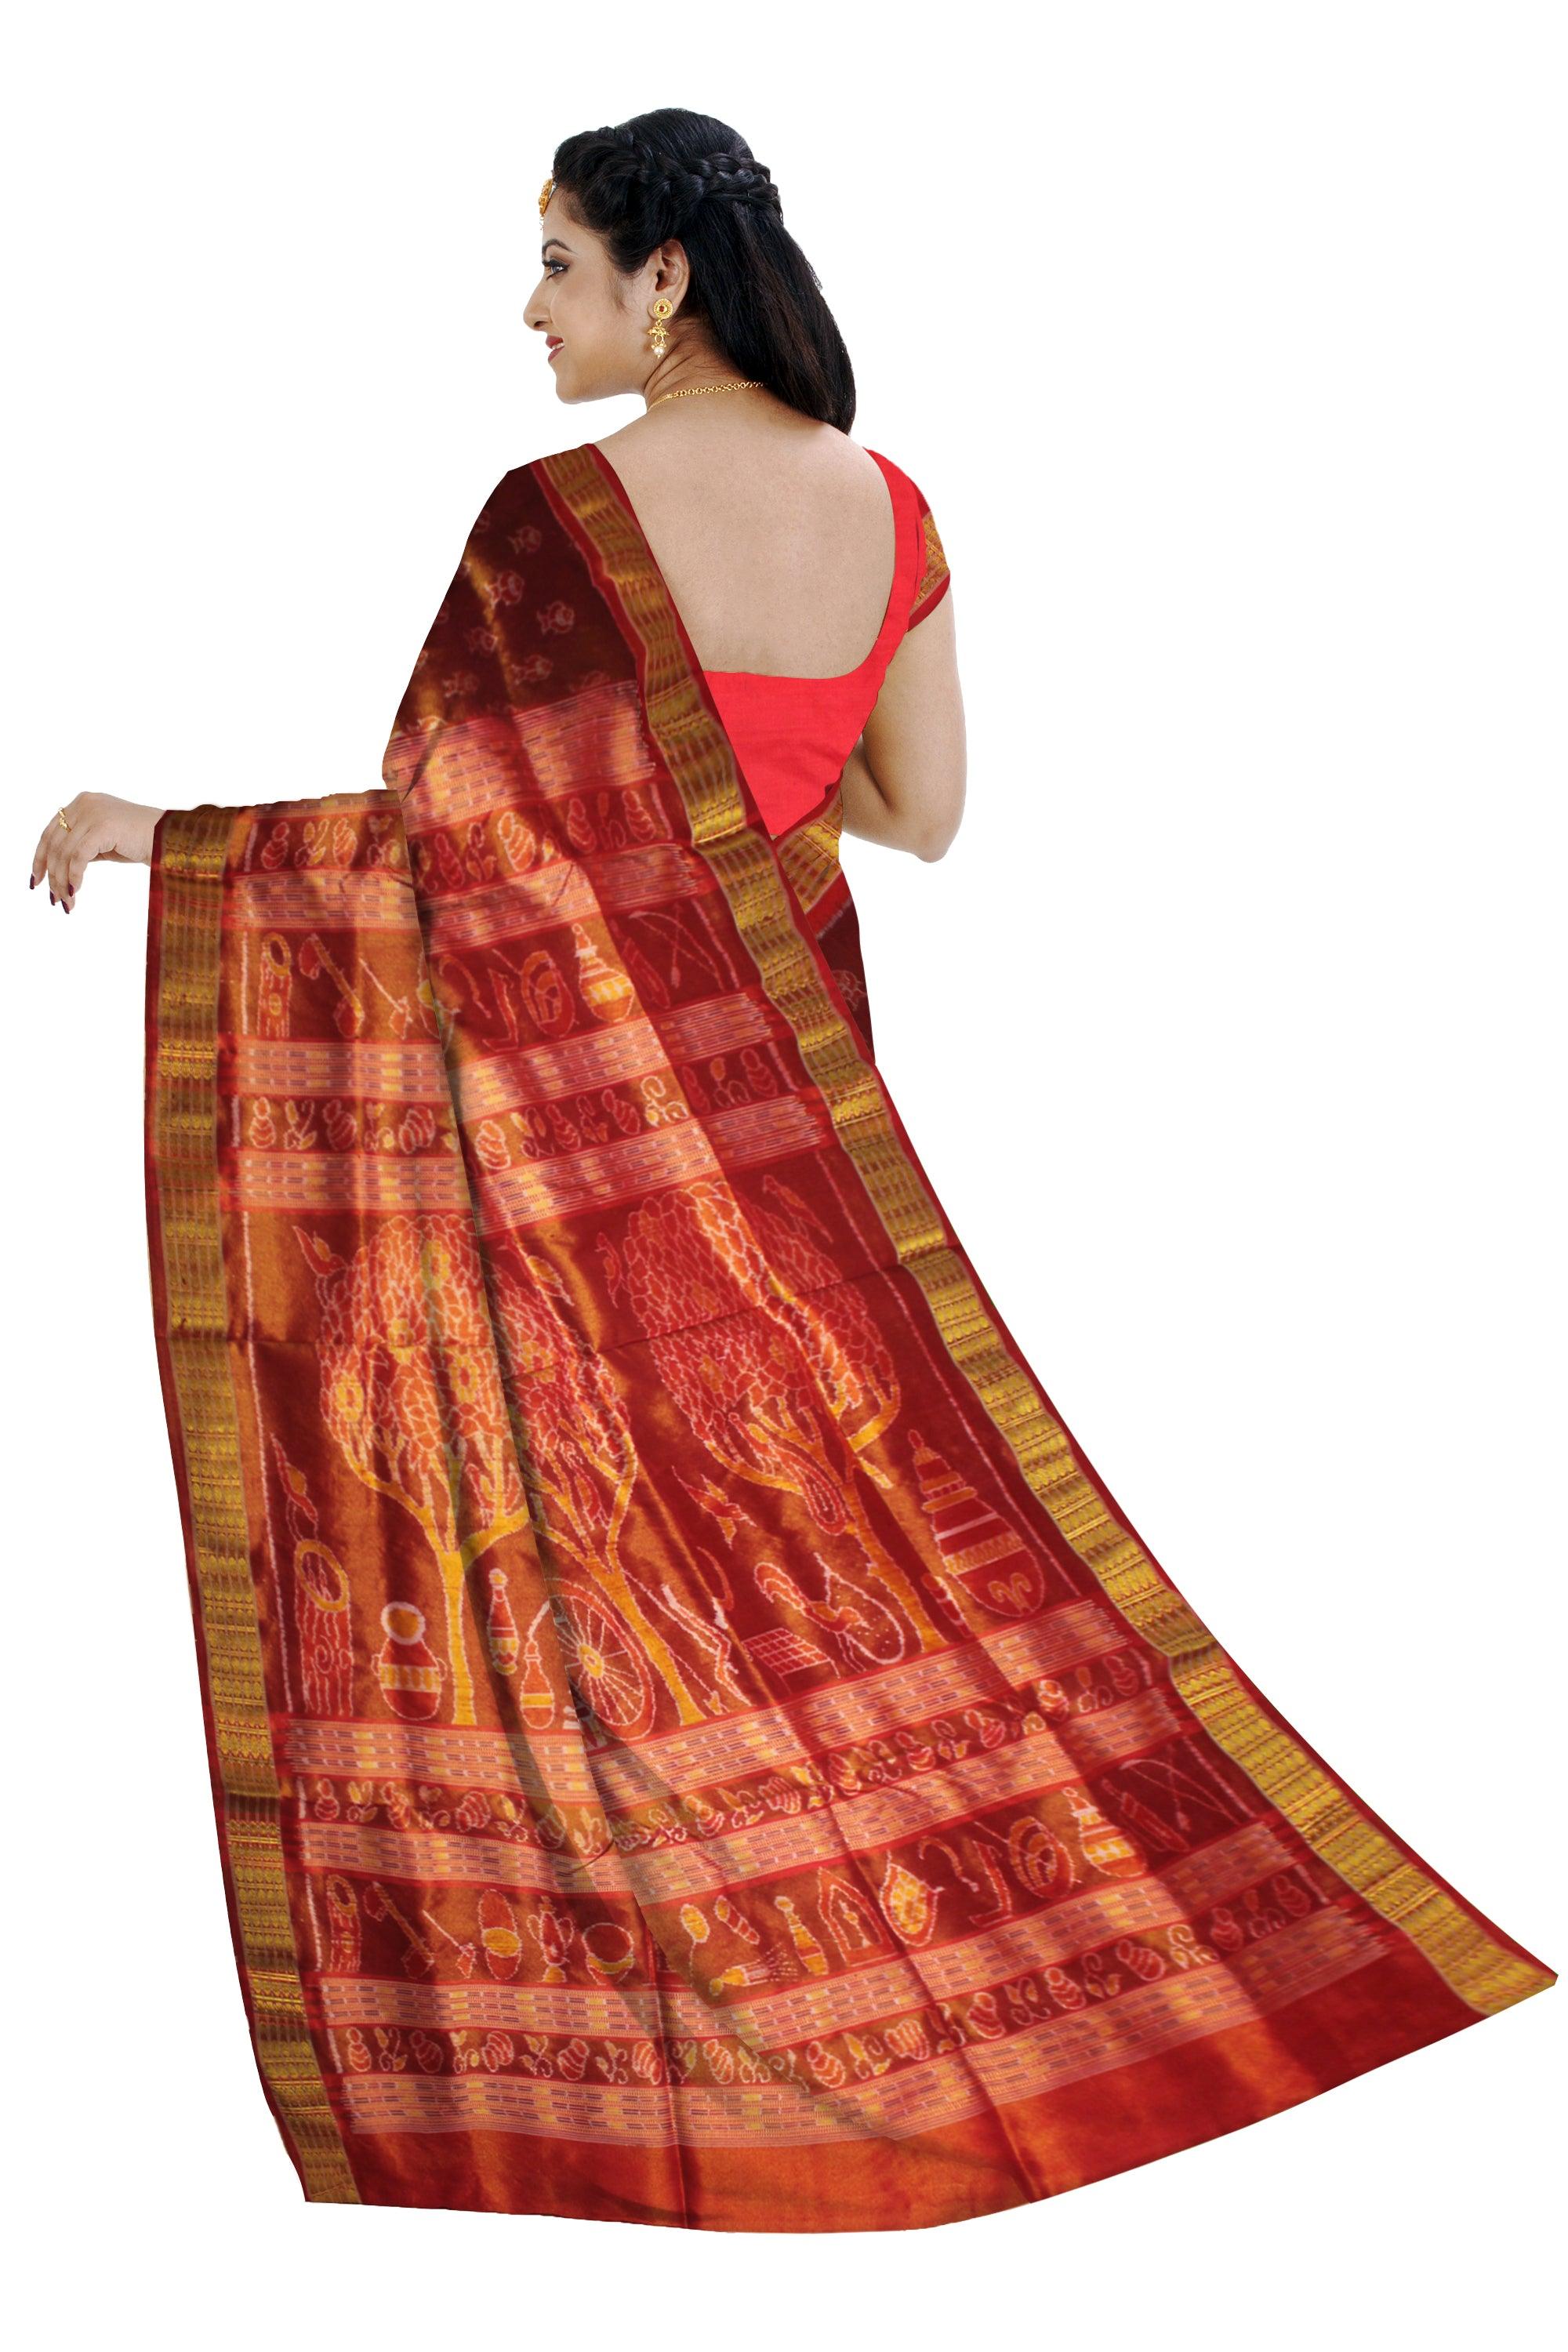 Handloom Pure Silk Tissue Sari in Mango Orange and Maroon | Red and Gold Border | Tree and Village scenary Pallu WITH BLOUSE - Koshali Arts & Crafts Enterprise